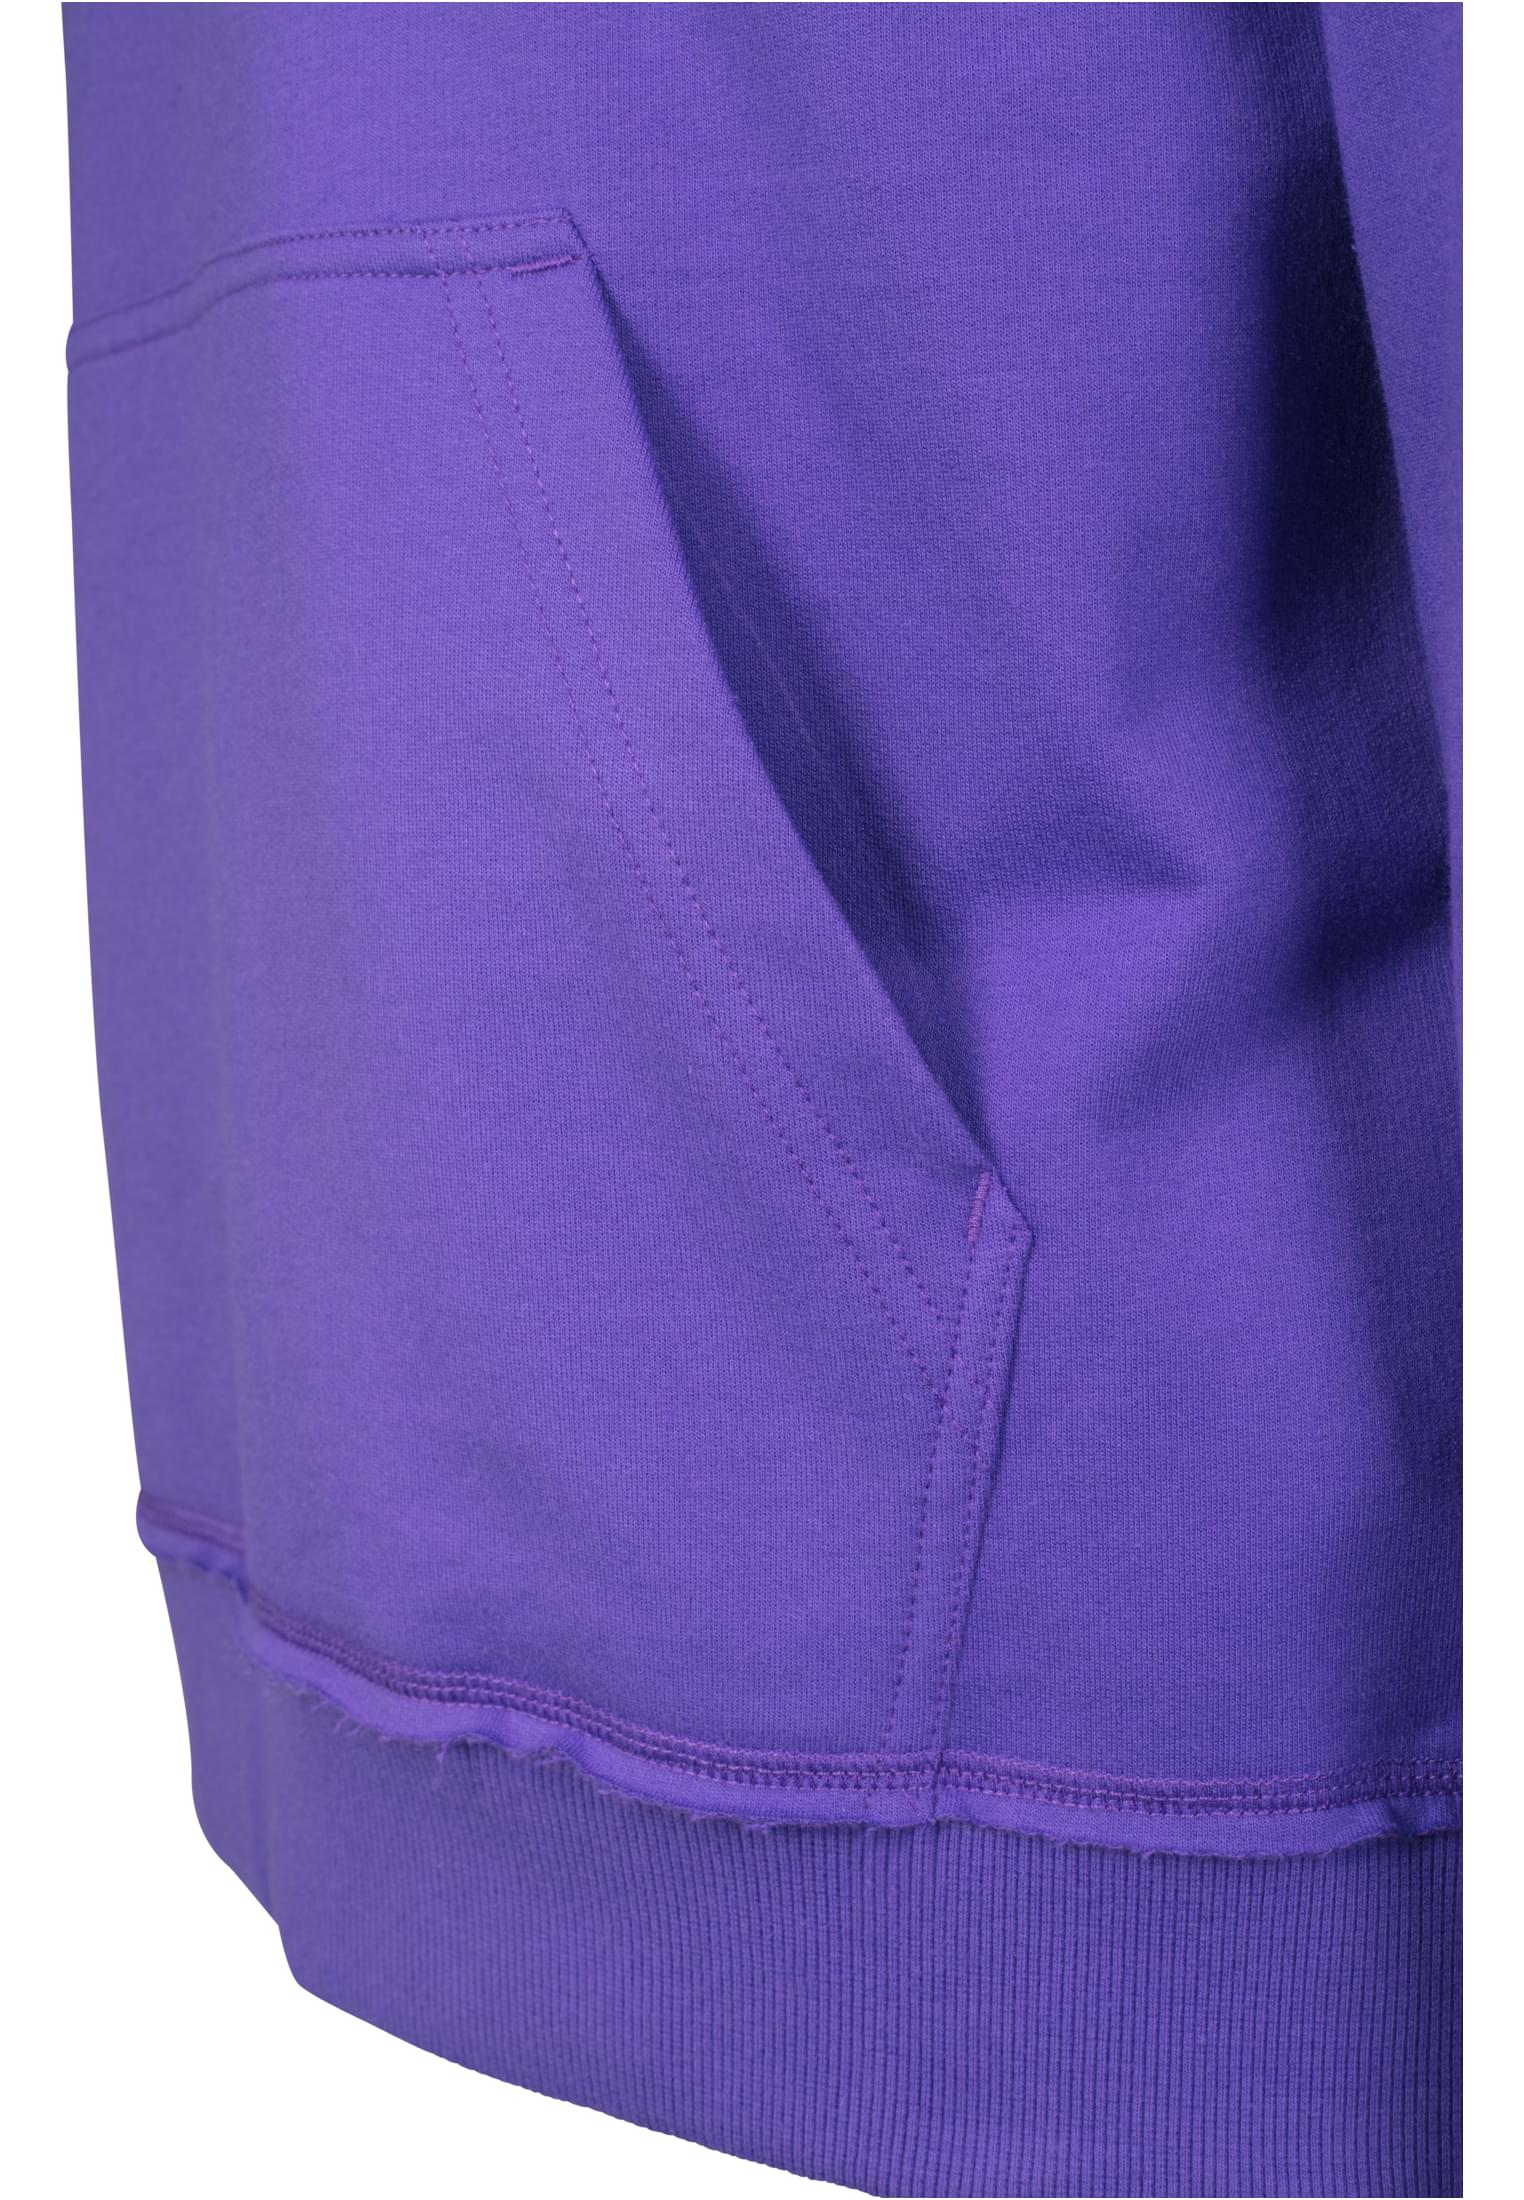 Hoodies Oversized Sweat Hoody in Farbe ultraviolet